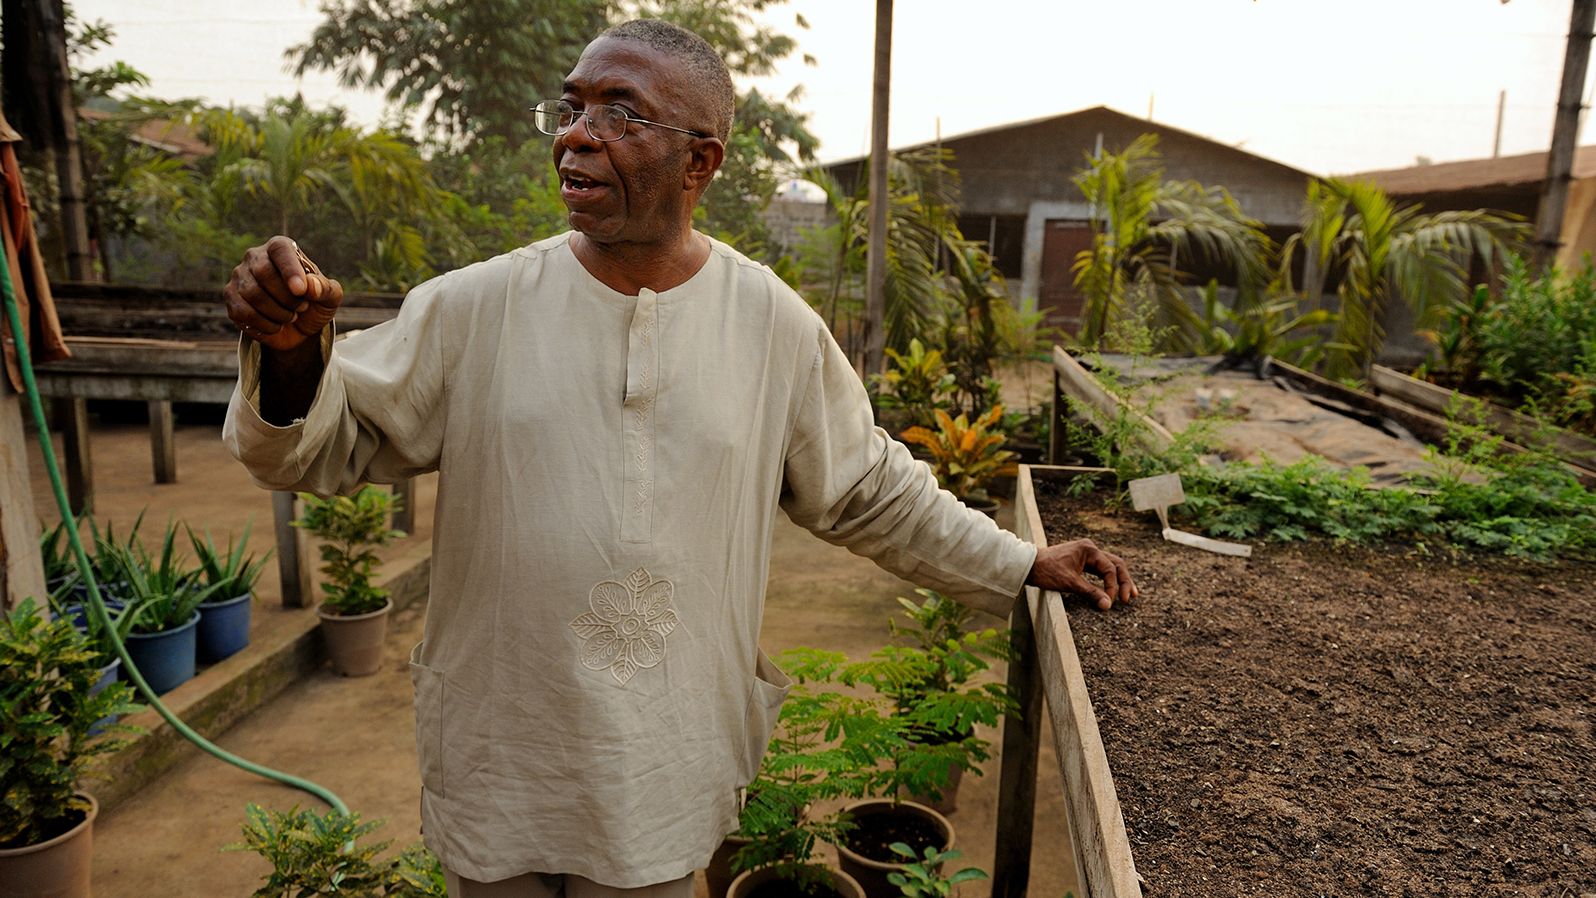 Father Godfrey Nzamujo, Founder and Director of Songhai, on his zero waste farm in Benin.